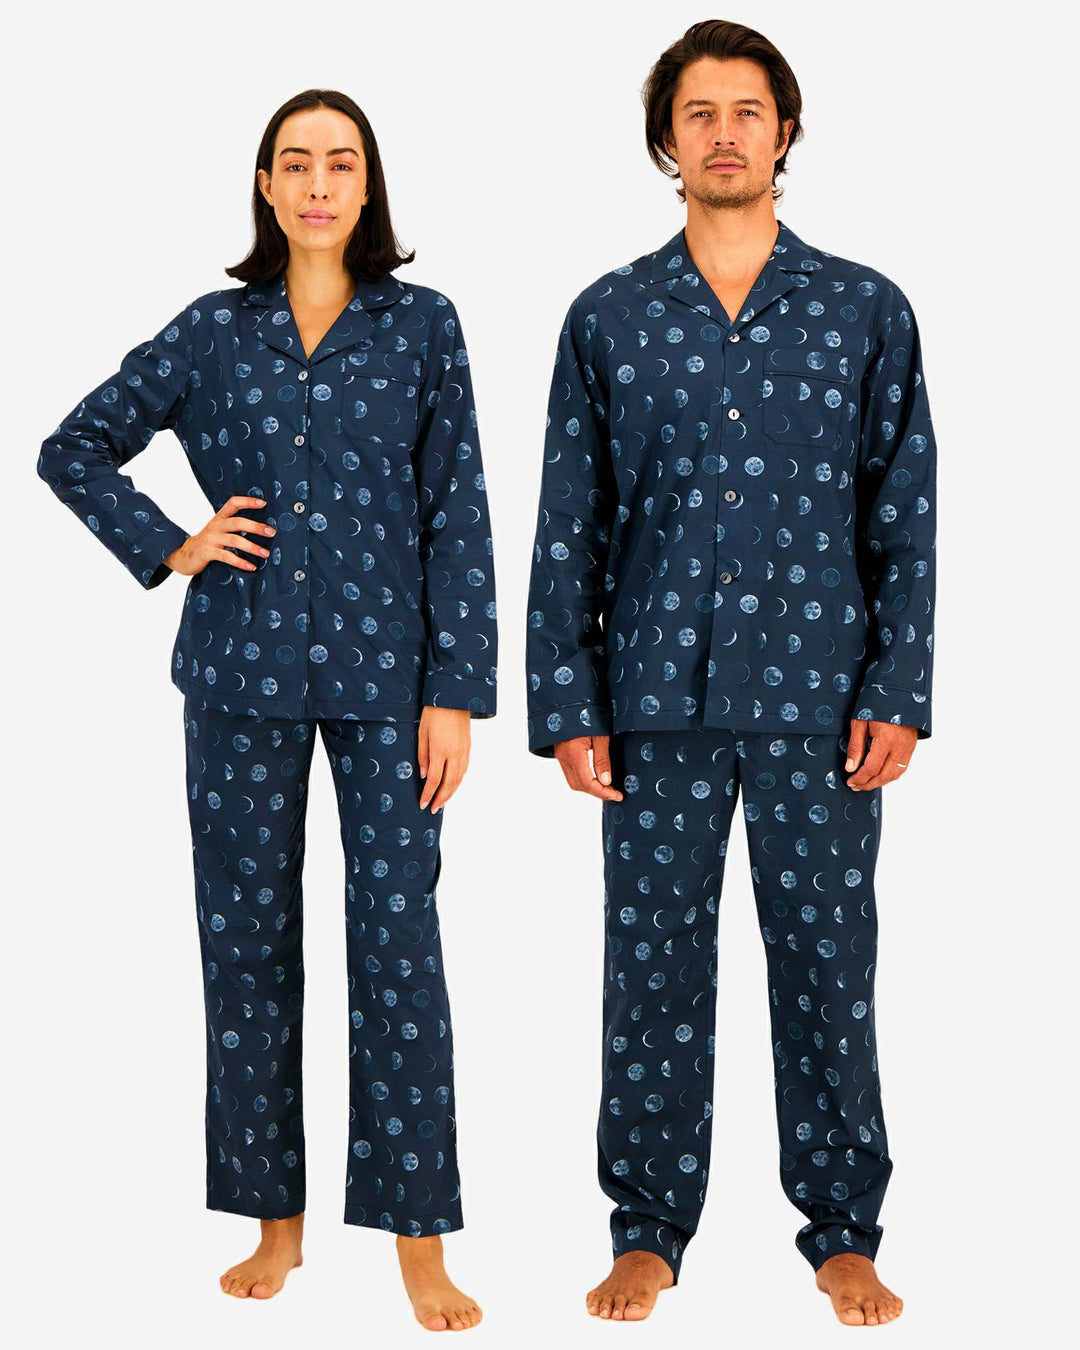 Blue matching pyjamas couple